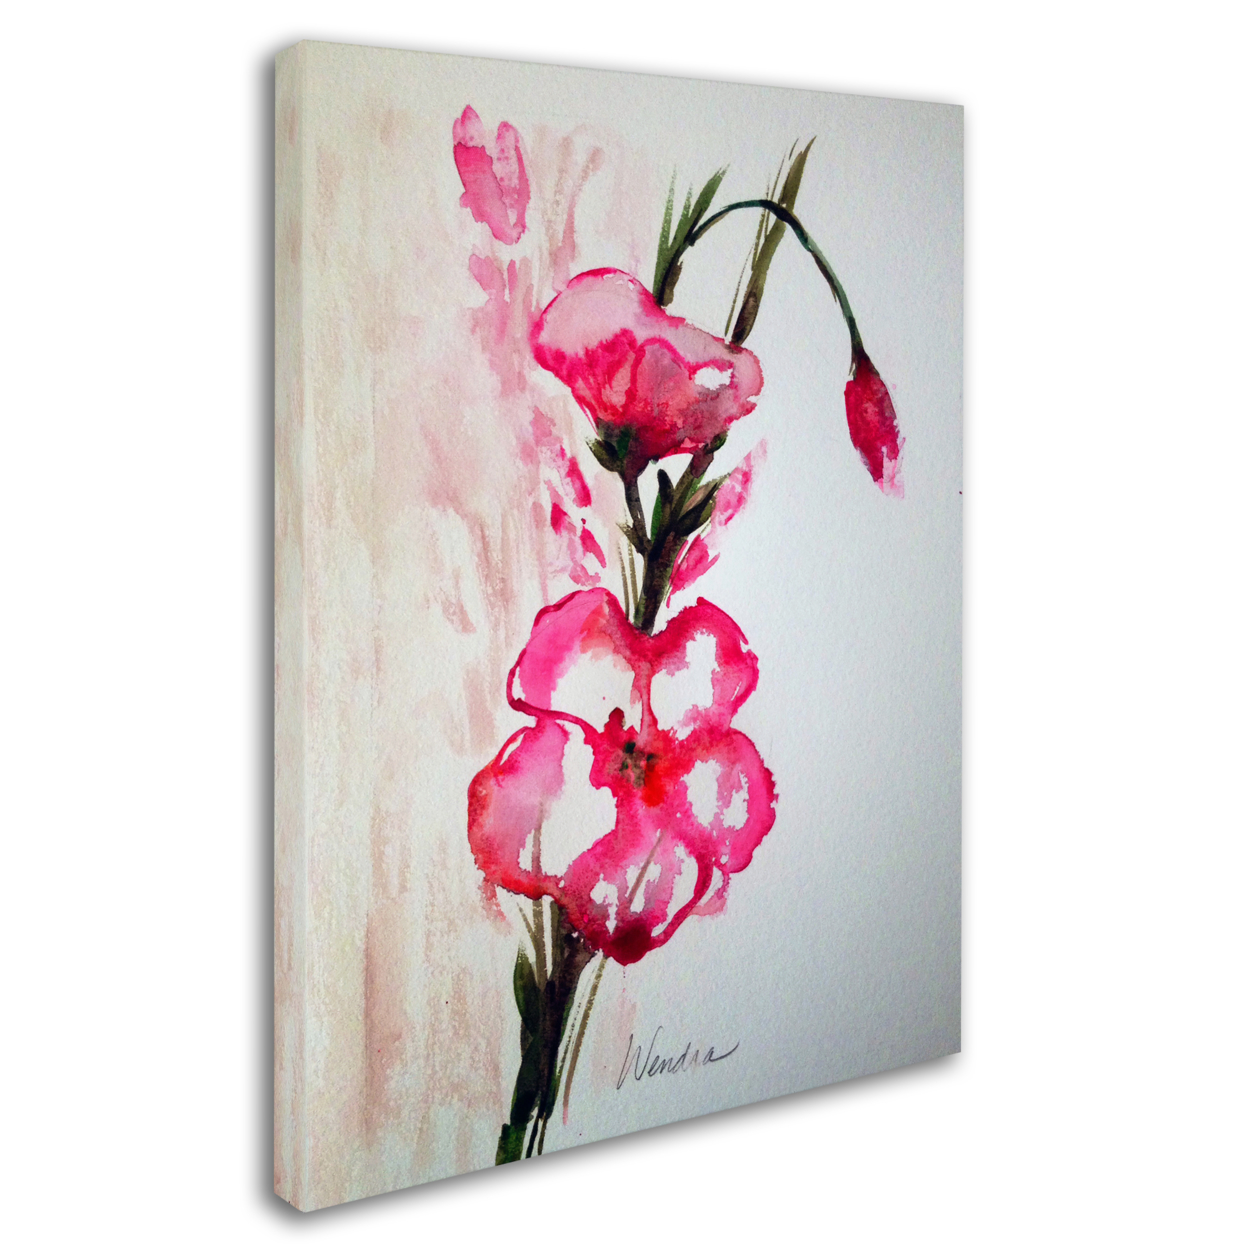 Wendra 'New Bloom' 14 X 19 Canvas Art